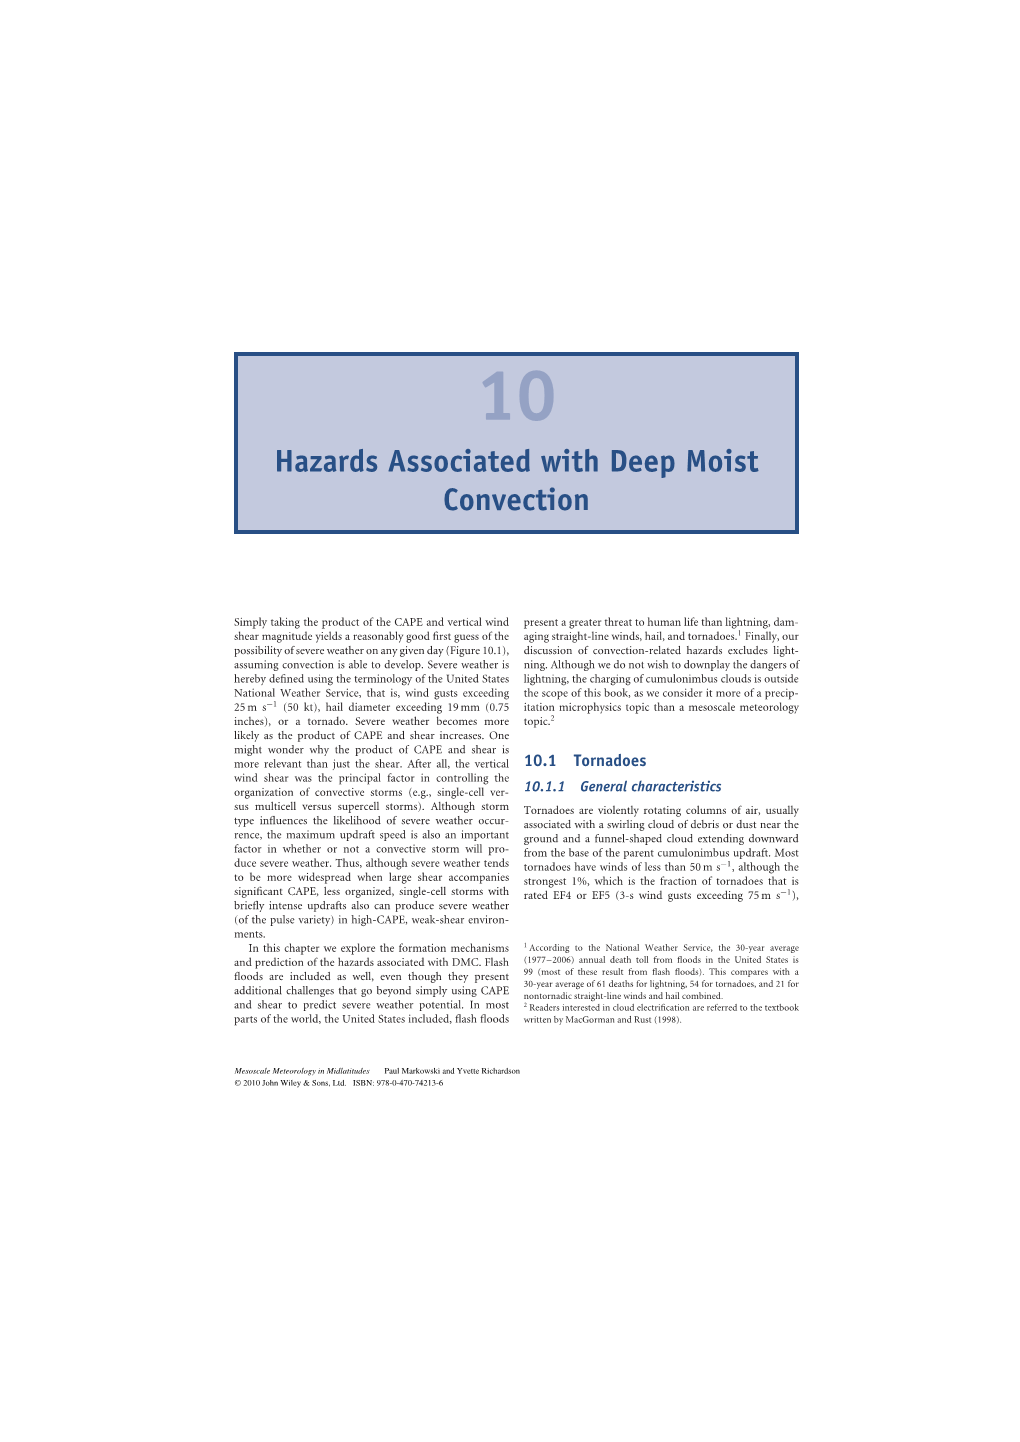 Hazards Associated with Deep Moist Convection